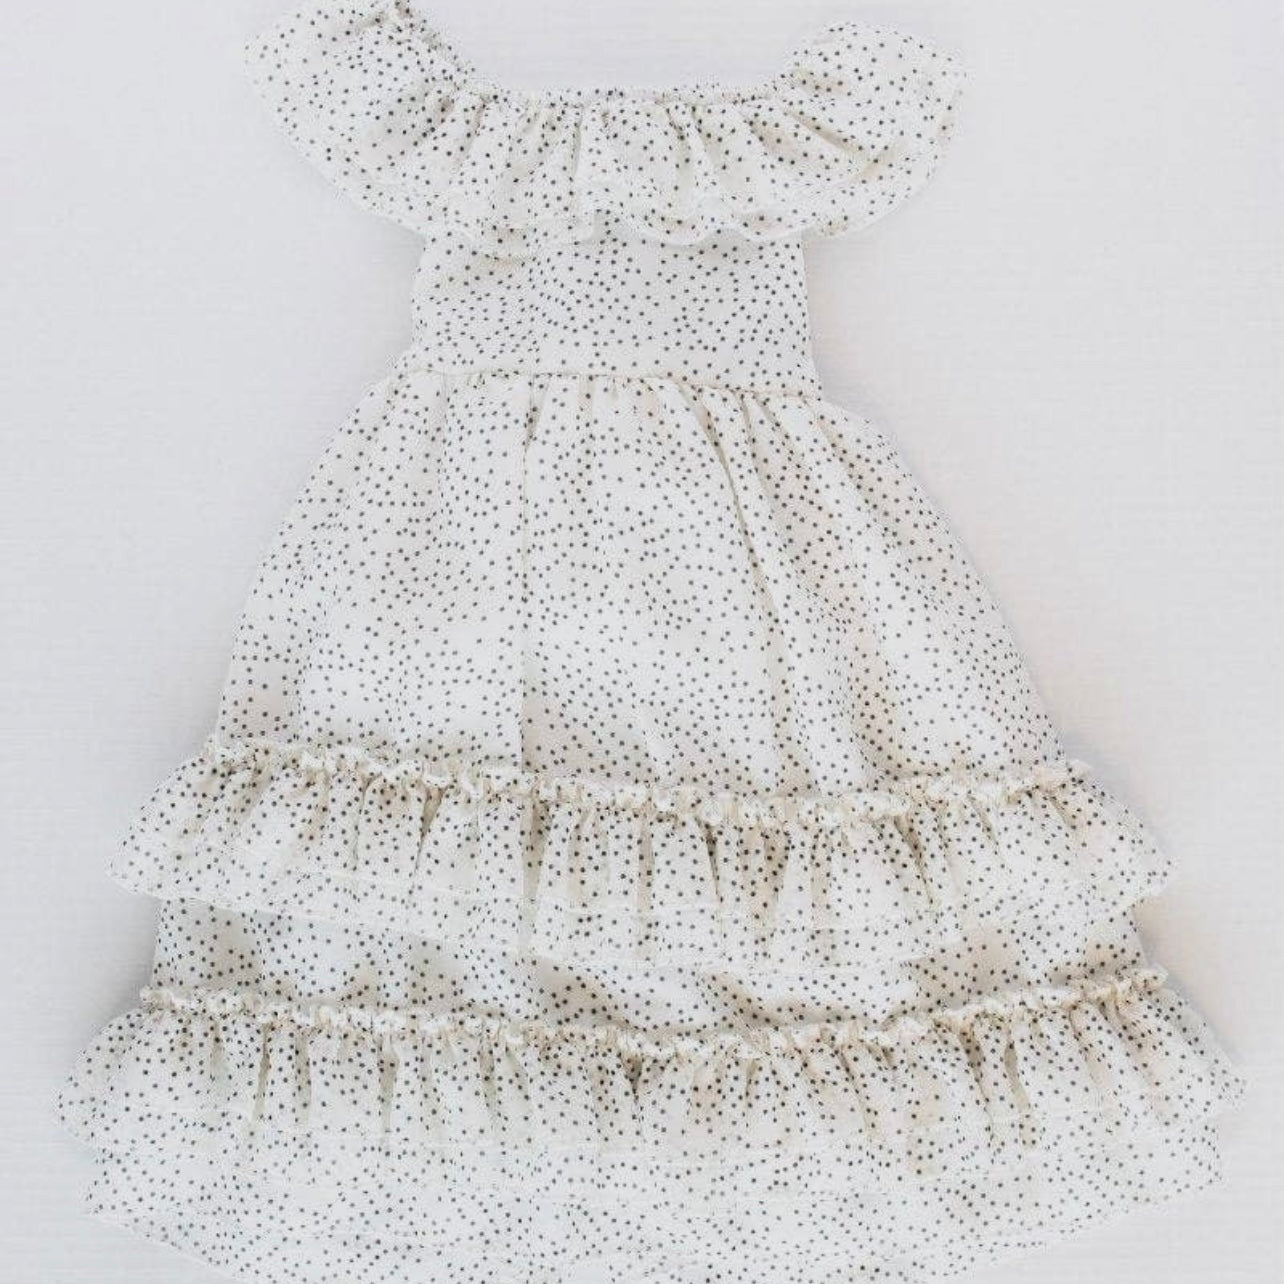 Infant Polka Dot Ruffle Dress